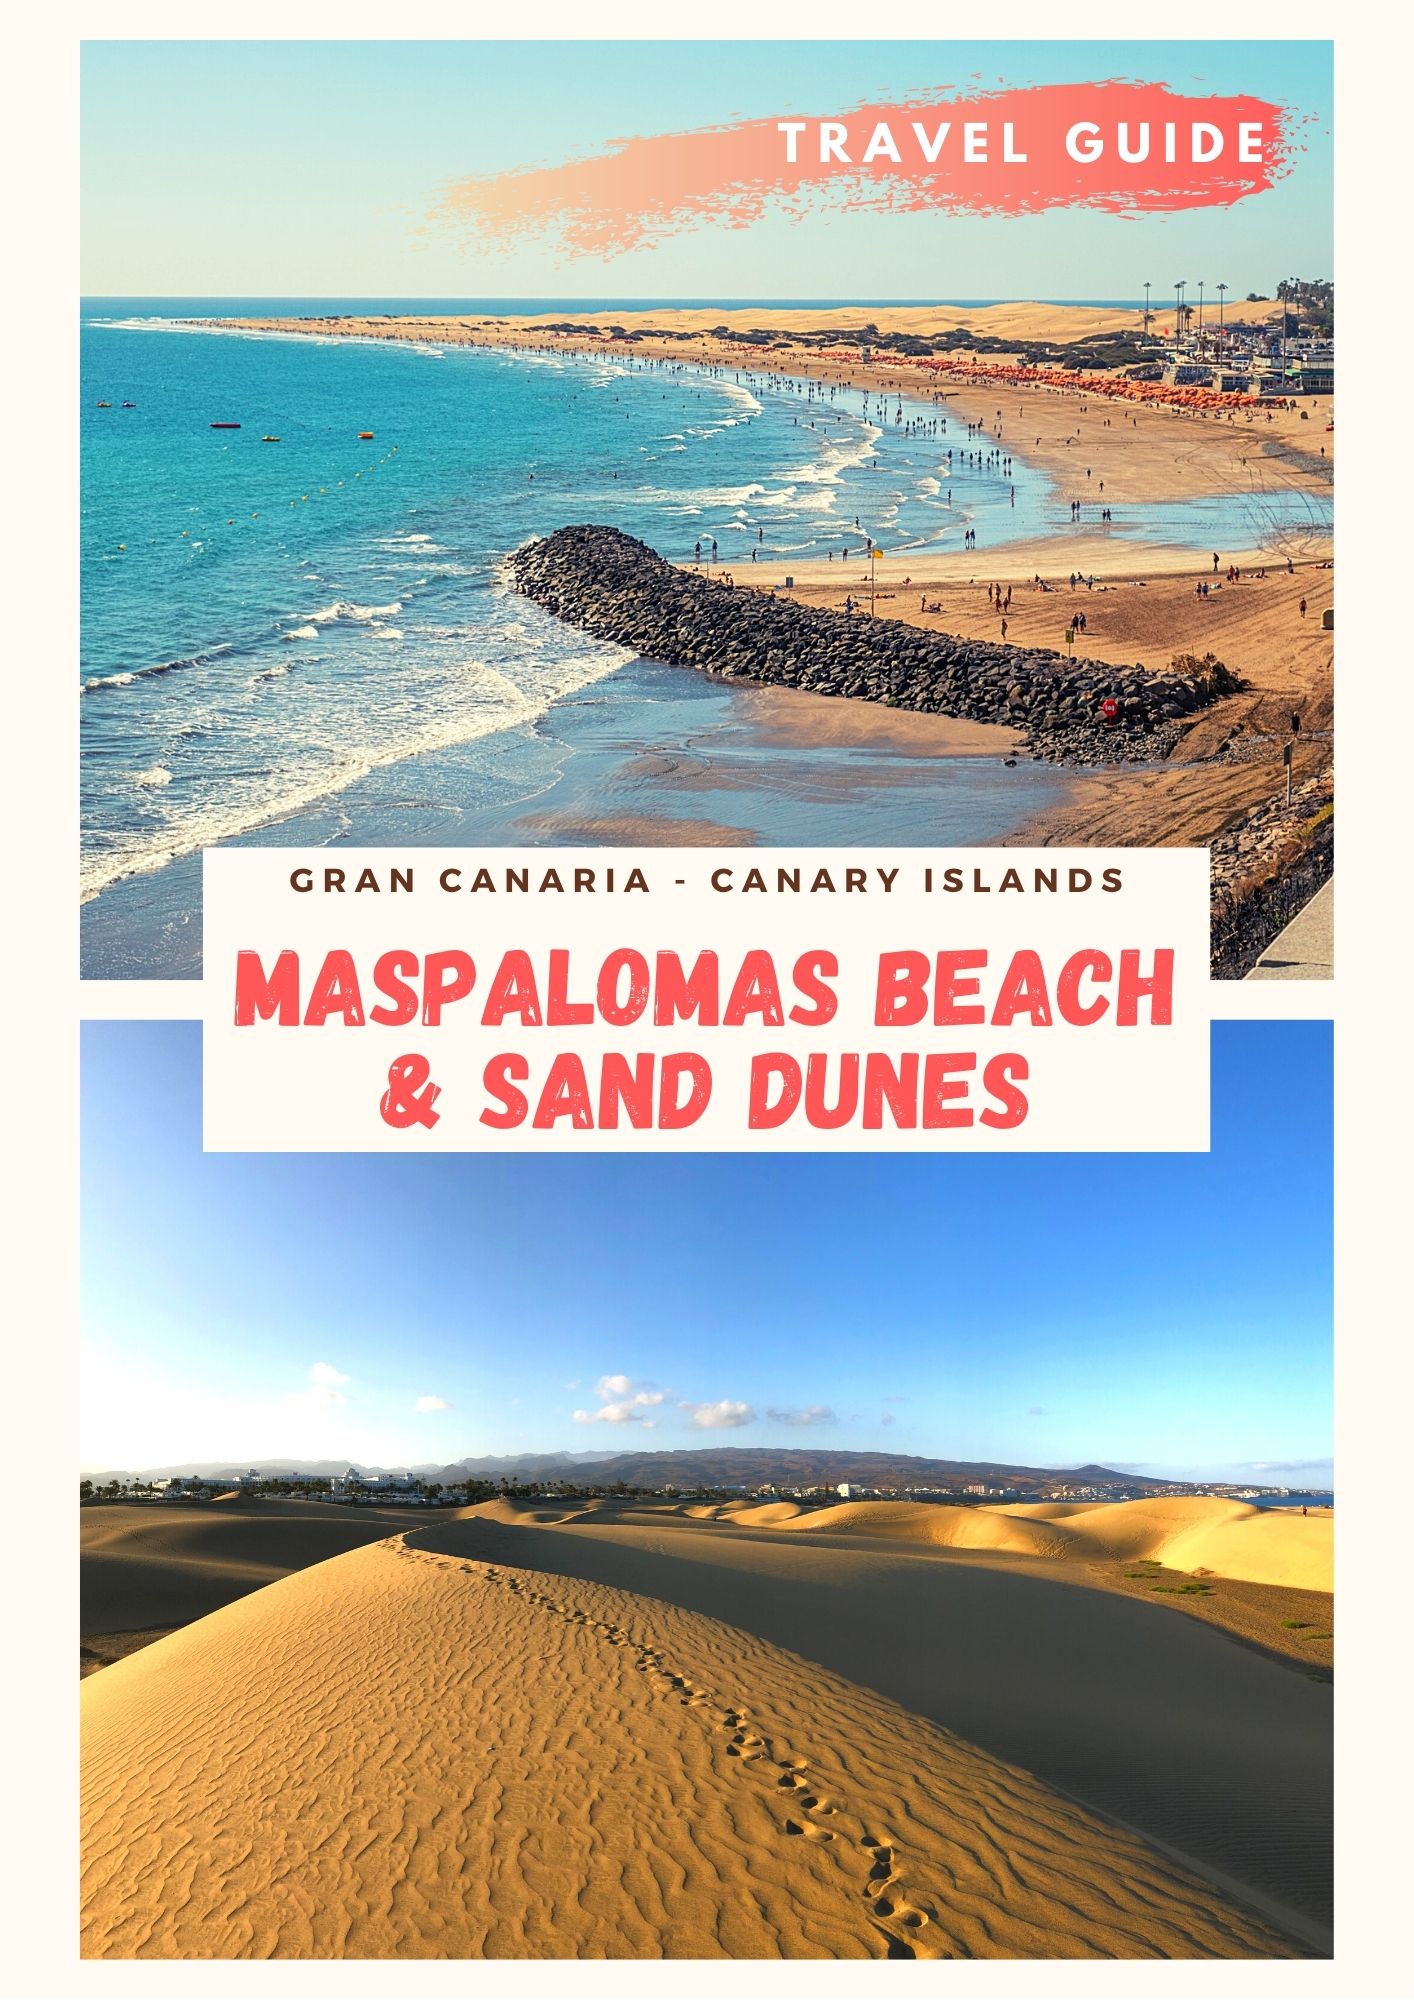 Maspalomas Beach and Sand Dunes pic pic